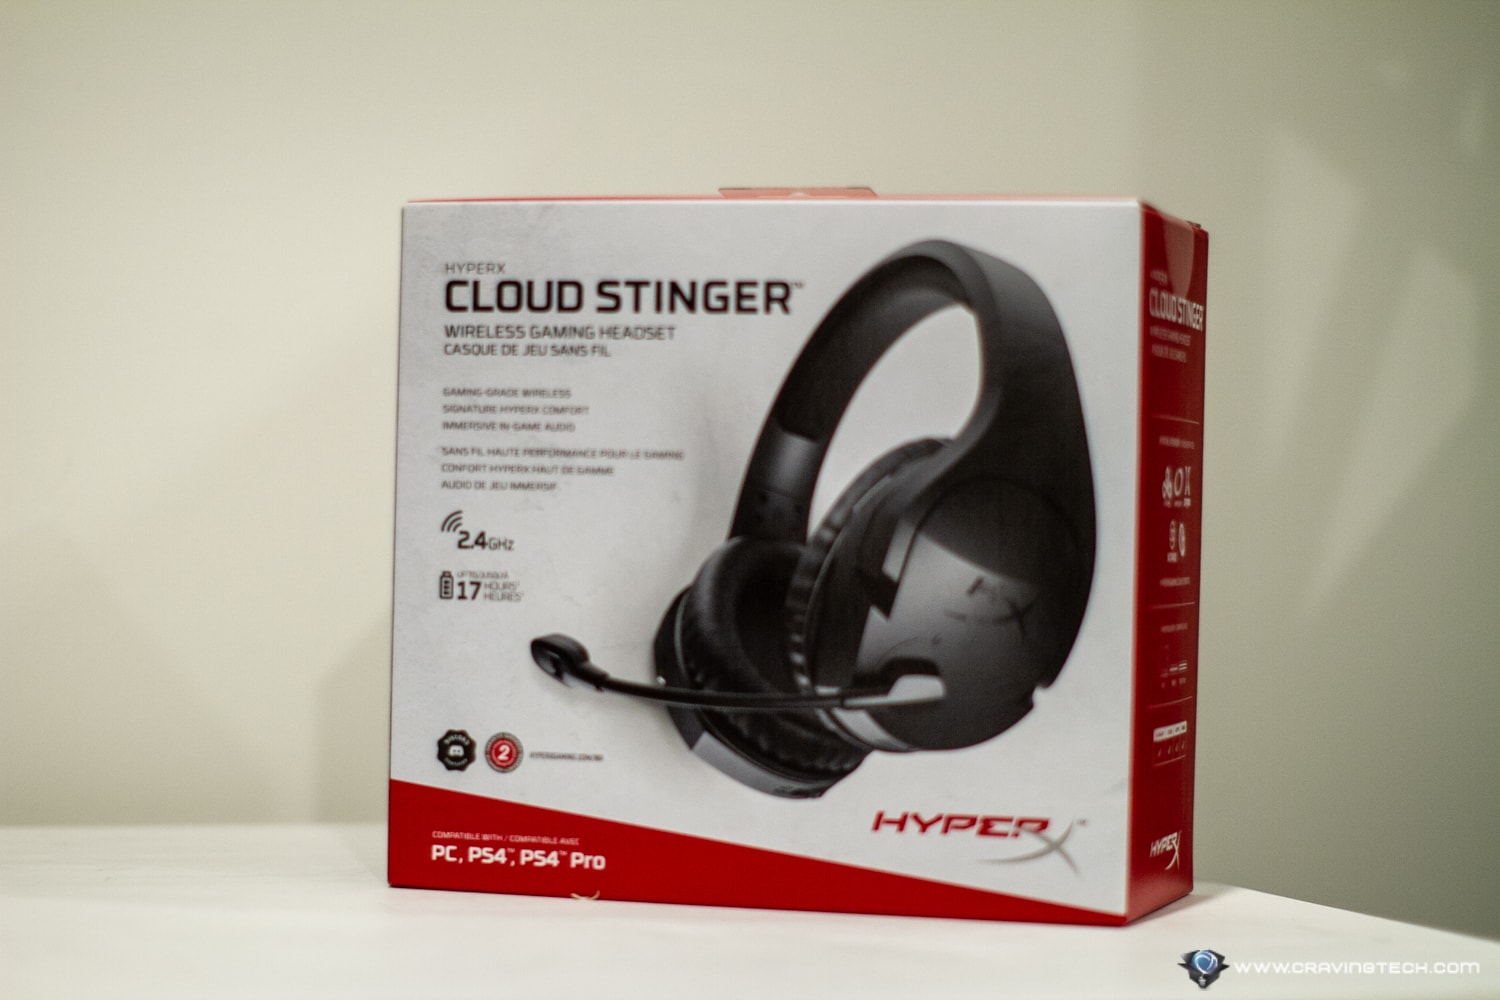 HyperX Cloud Stinger Wireless Gaming Headset Packaging